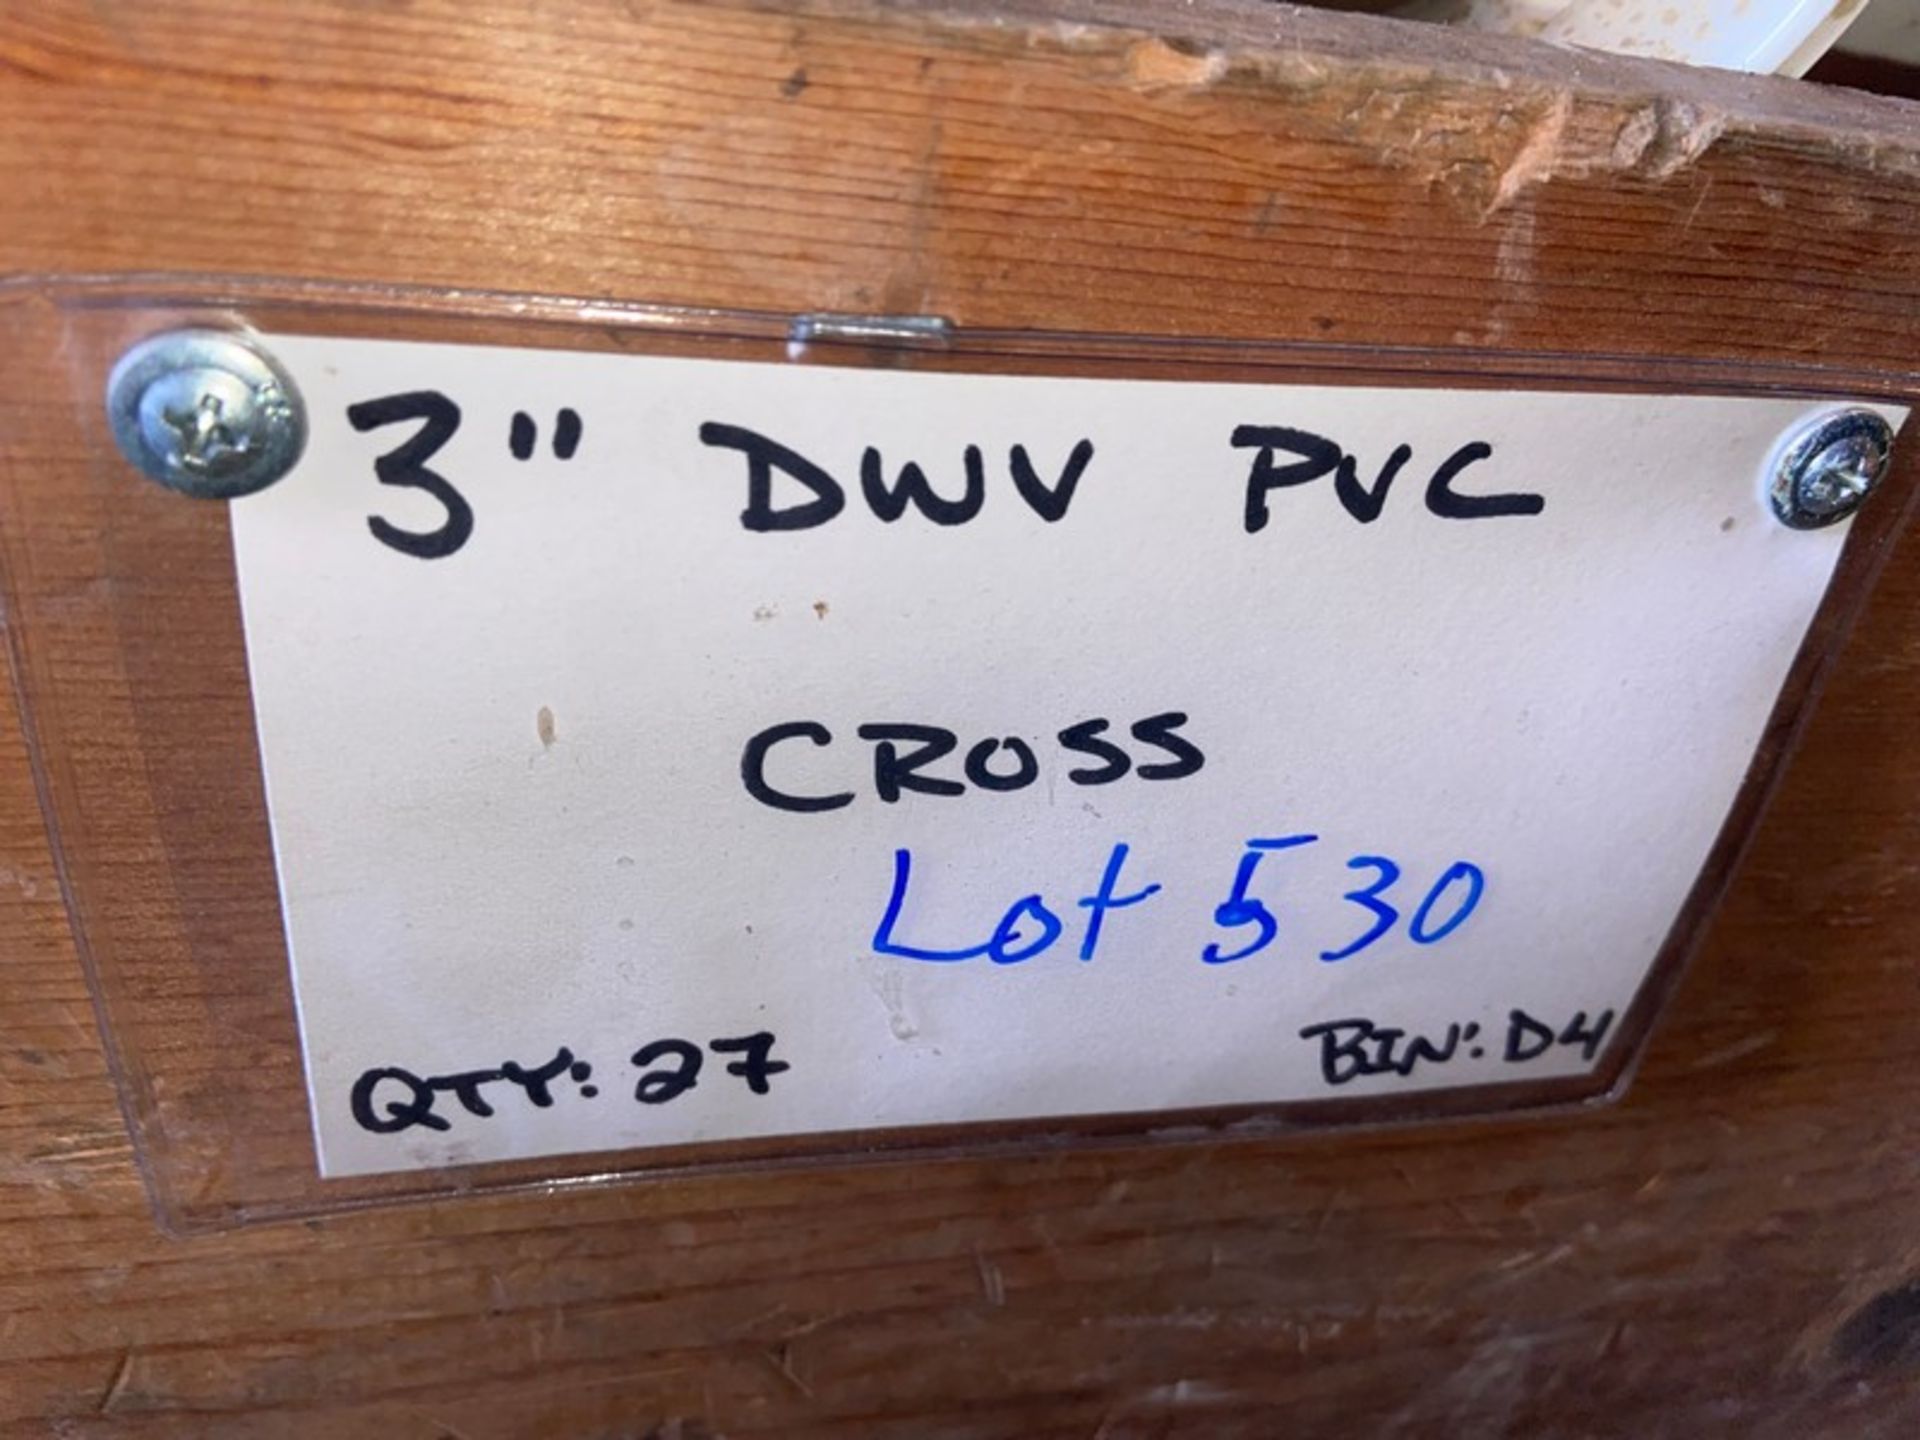 (27) 3” DWV PVC CROSS (Bin:D4) (LOCATED IN MONROEVILLE, PA) - Image 4 of 4